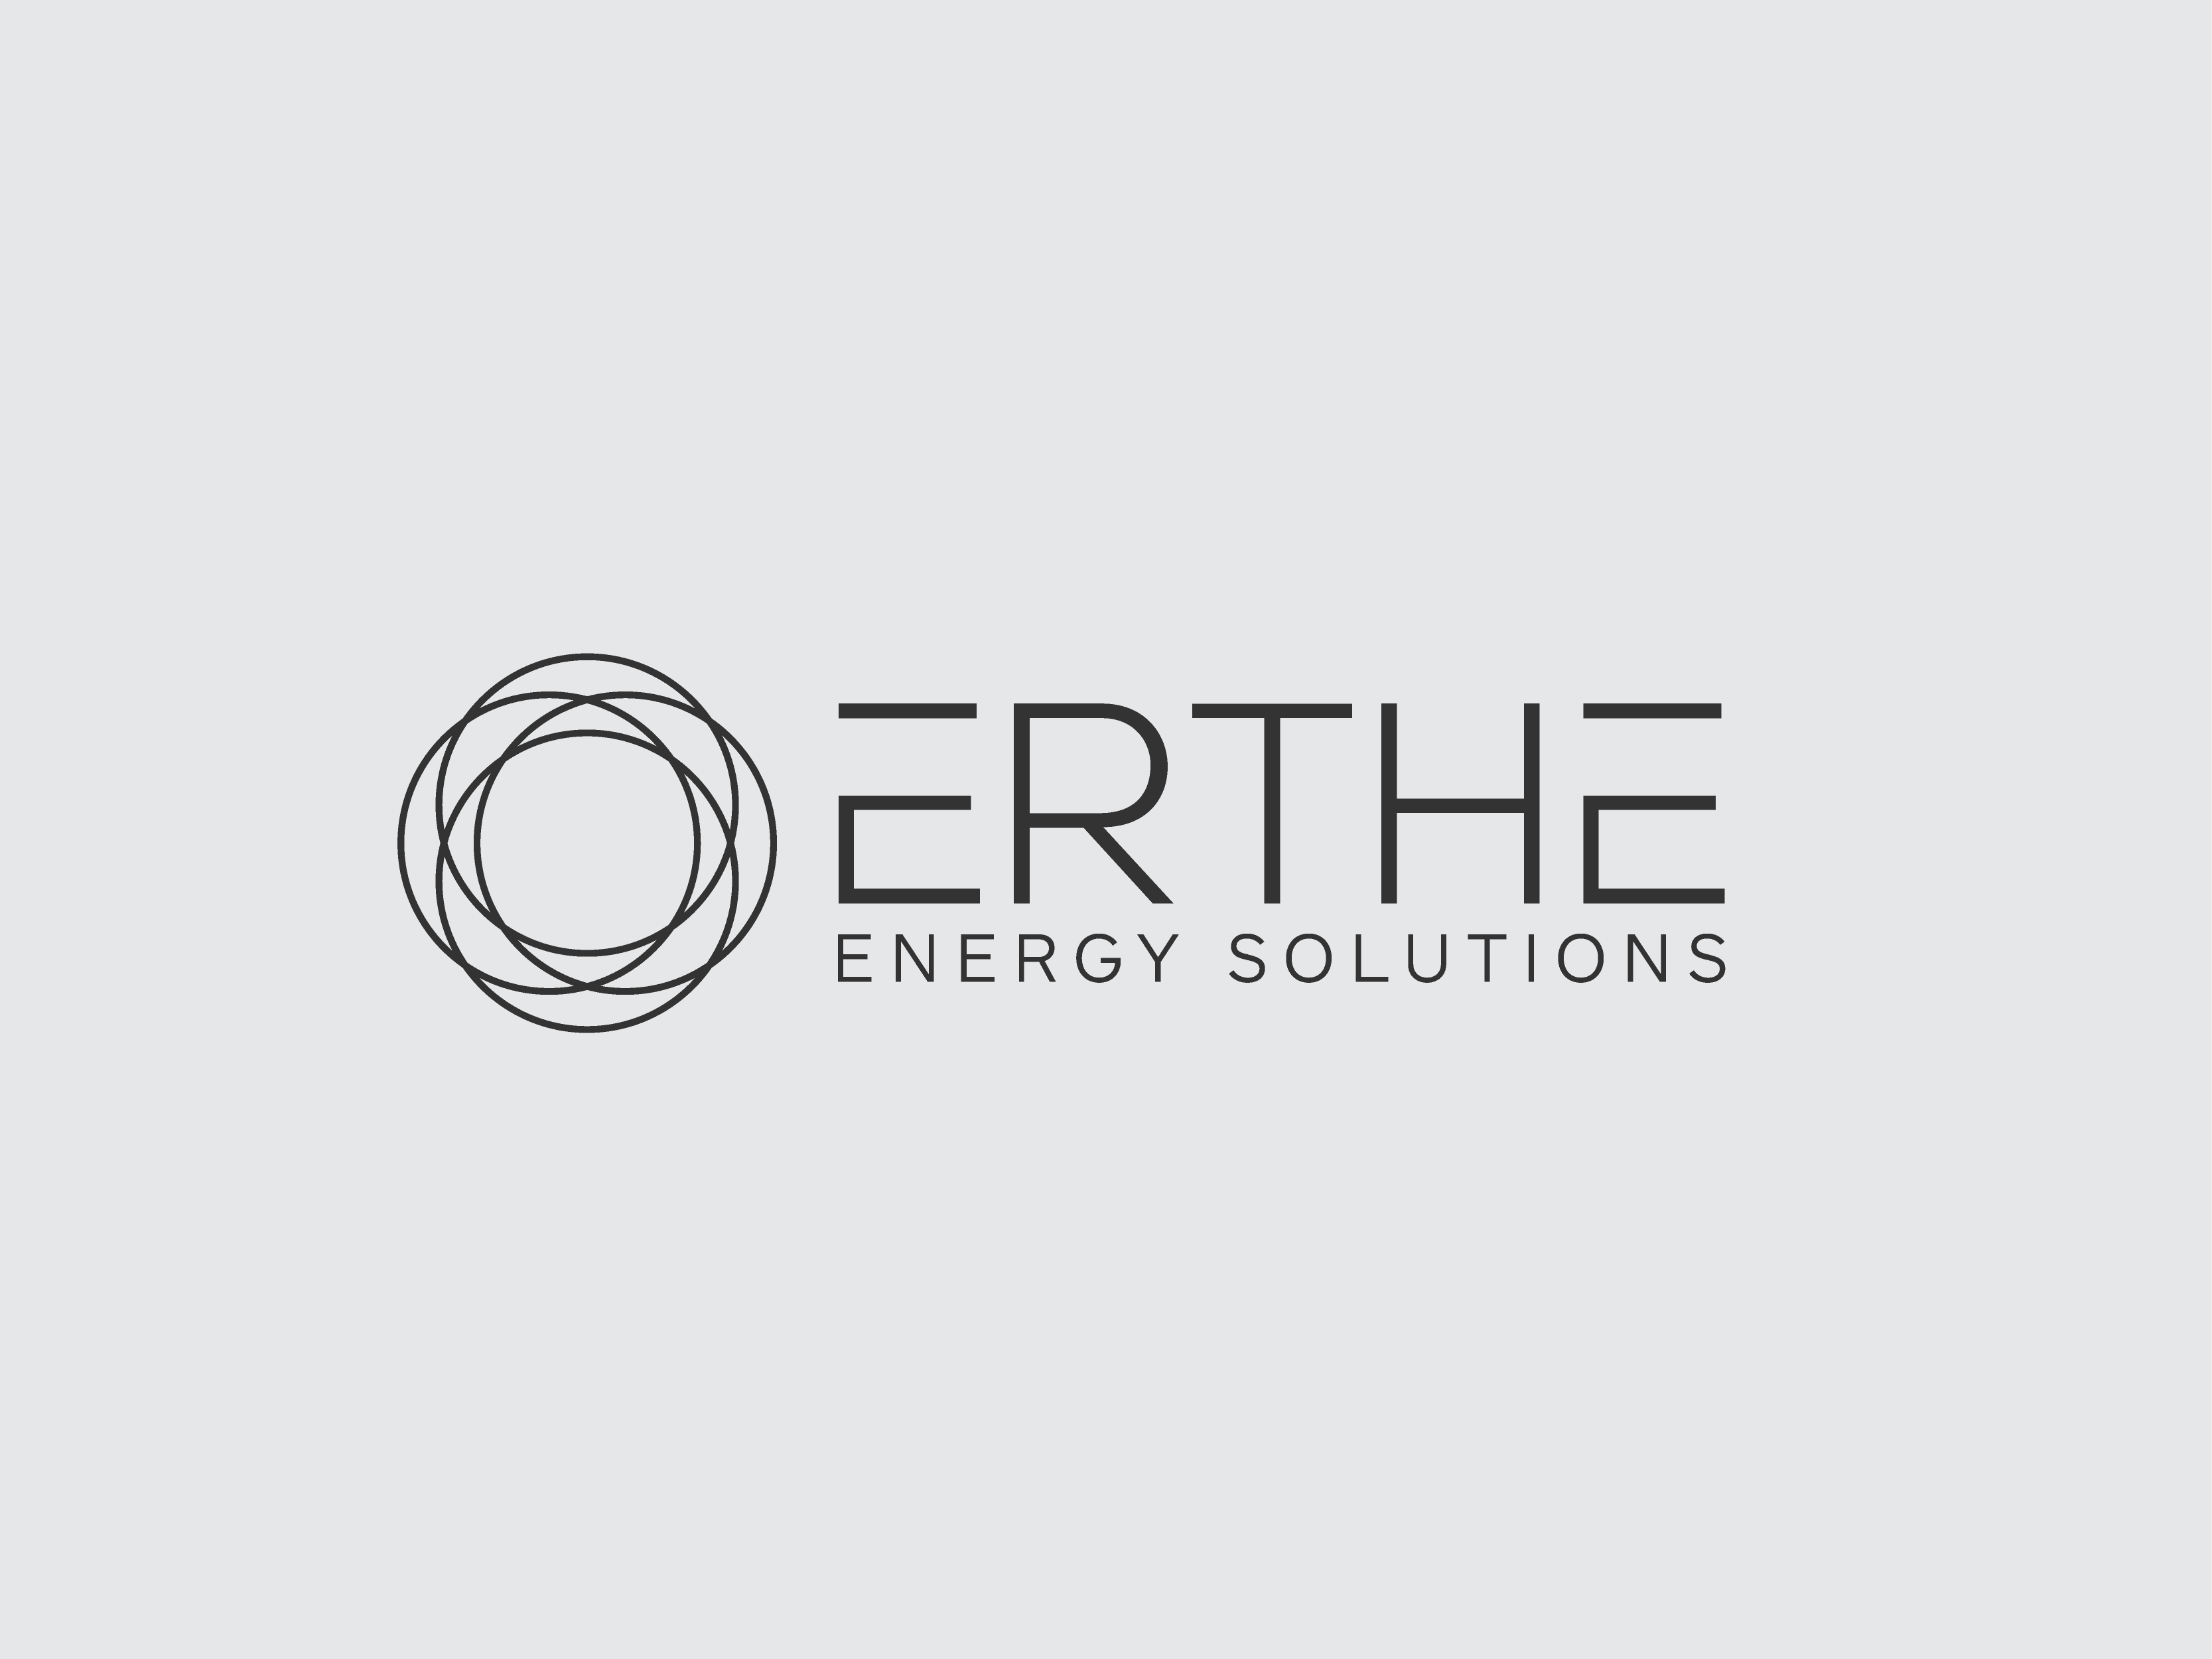 Erthe Energy Solutions